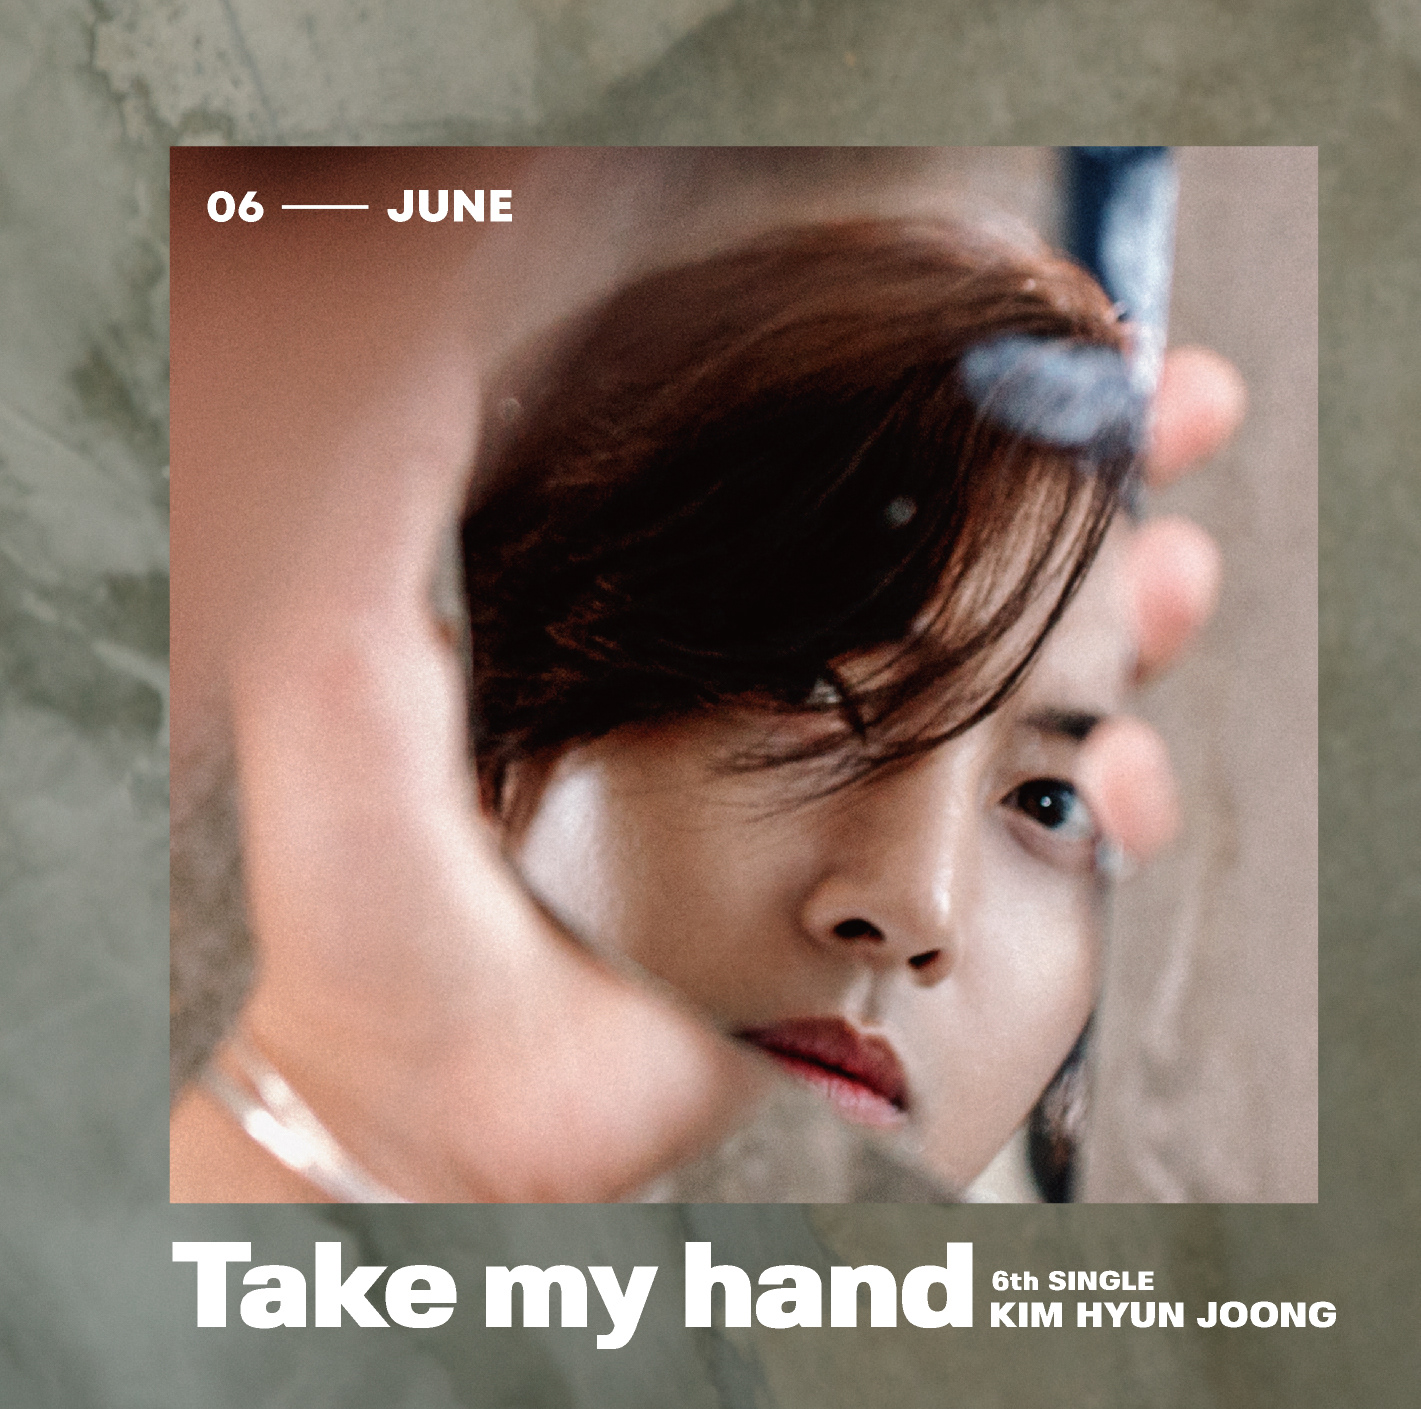 Sintético 105+ Foto kim hyun joong take my hand Cena hermosa